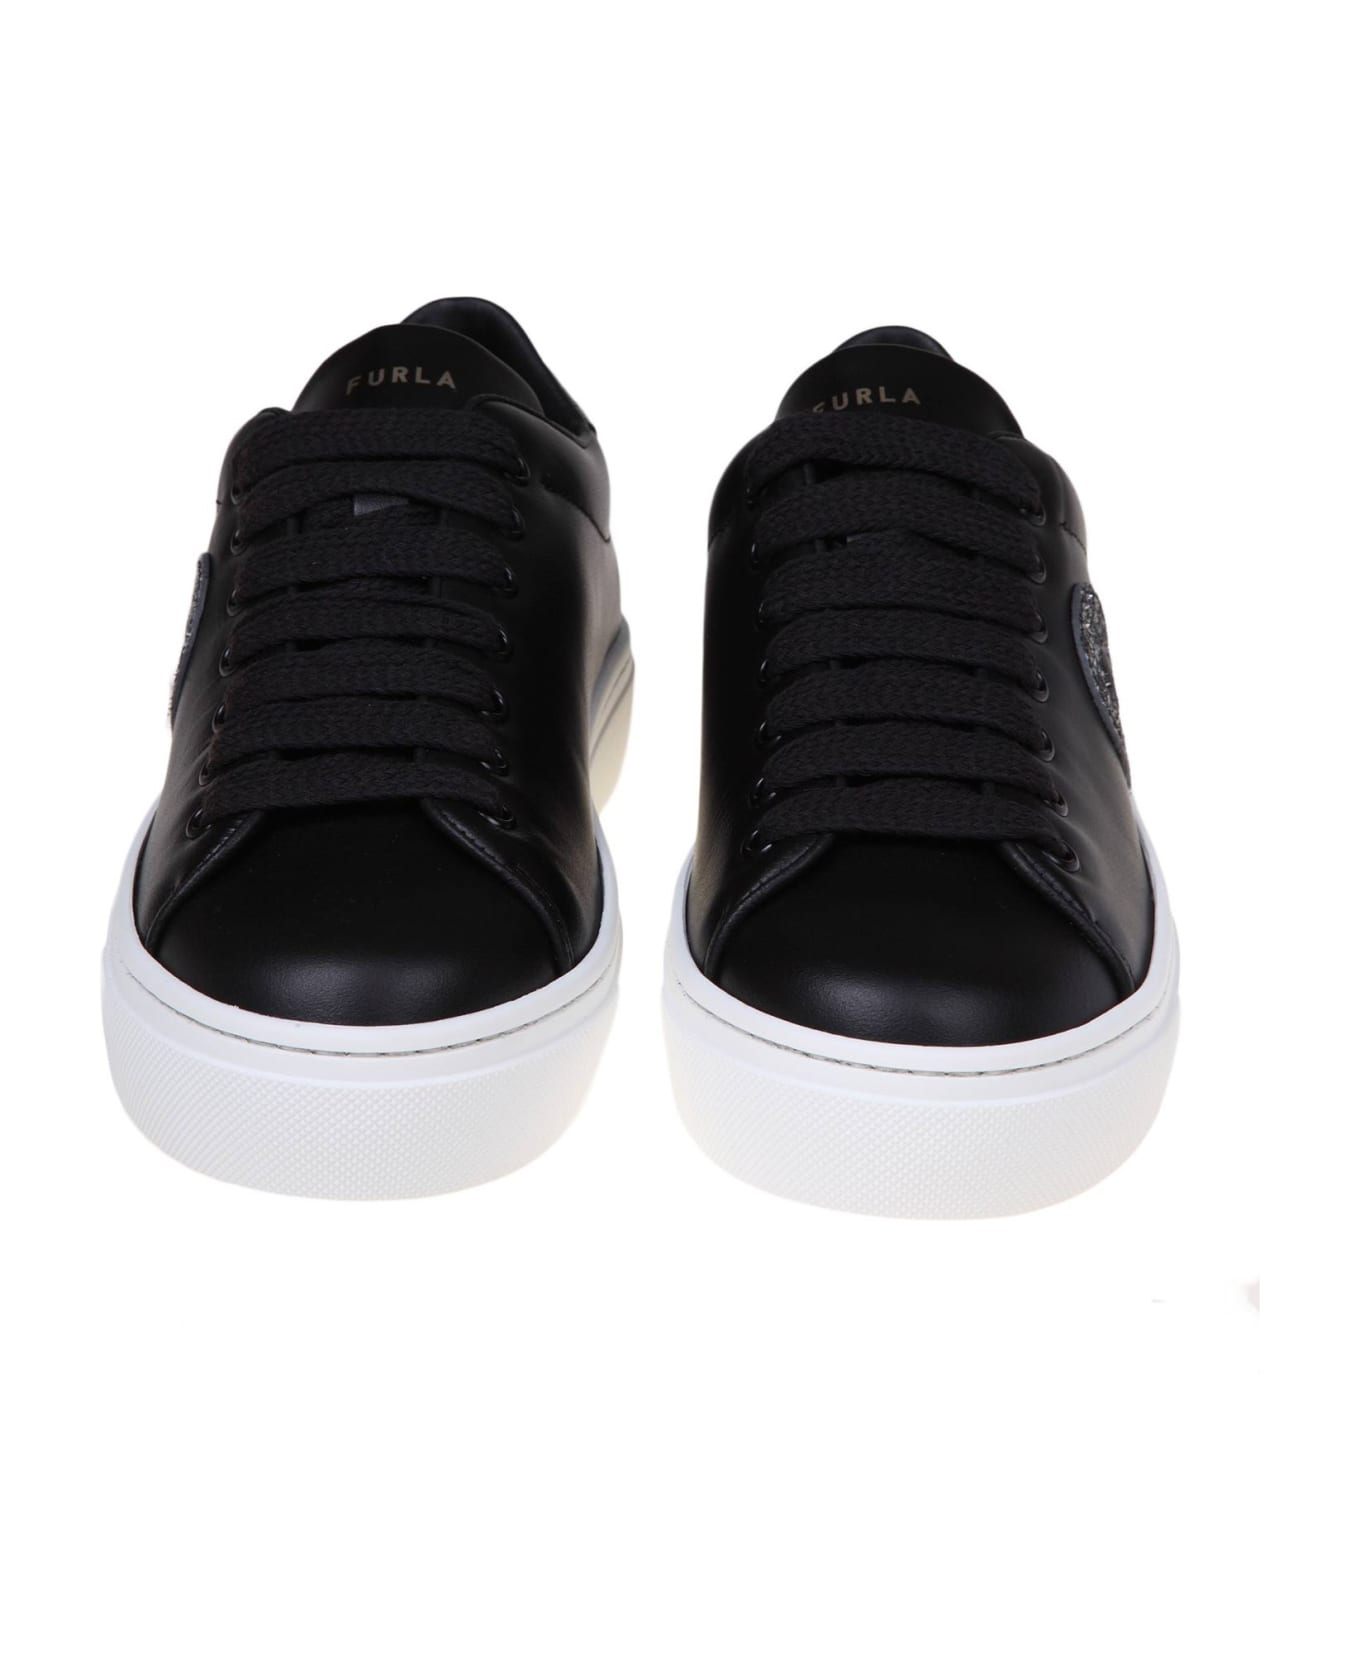 Furla Joy Lace Up Sneakers In Black Leather - Black